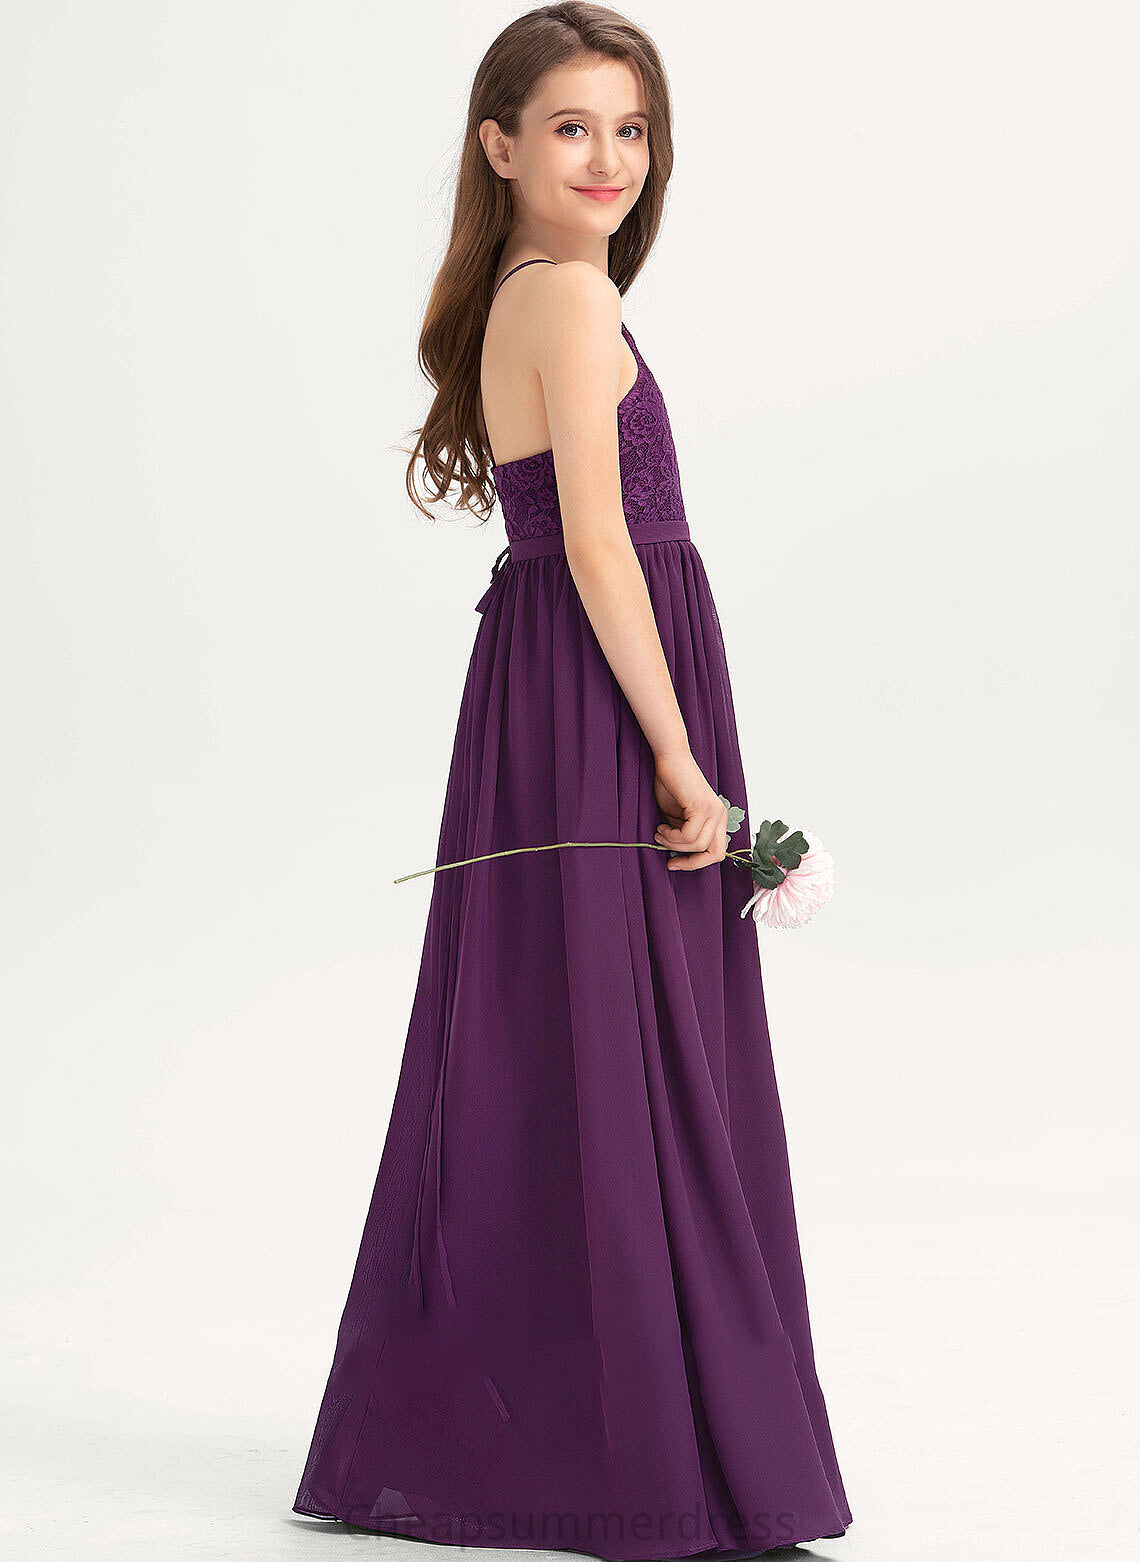 Chiffon Floor-Length Lace Junior Bridesmaid Dresses Miah A-Line Bow(s) With Neckline Square